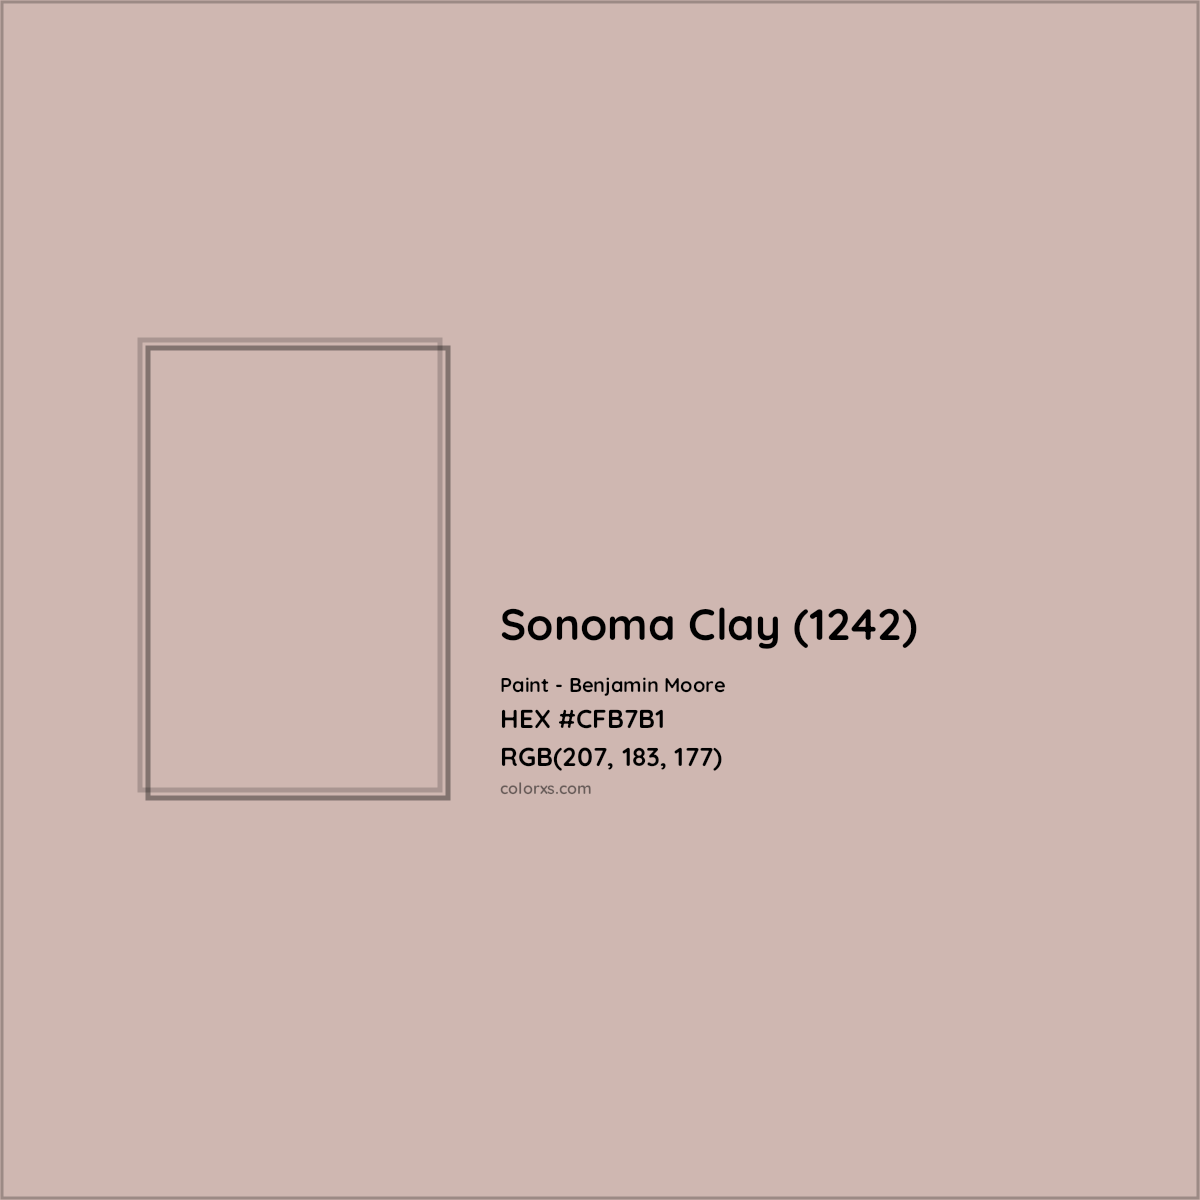 HEX #CFB7B1 Sonoma Clay (1242) Paint Benjamin Moore - Color Code